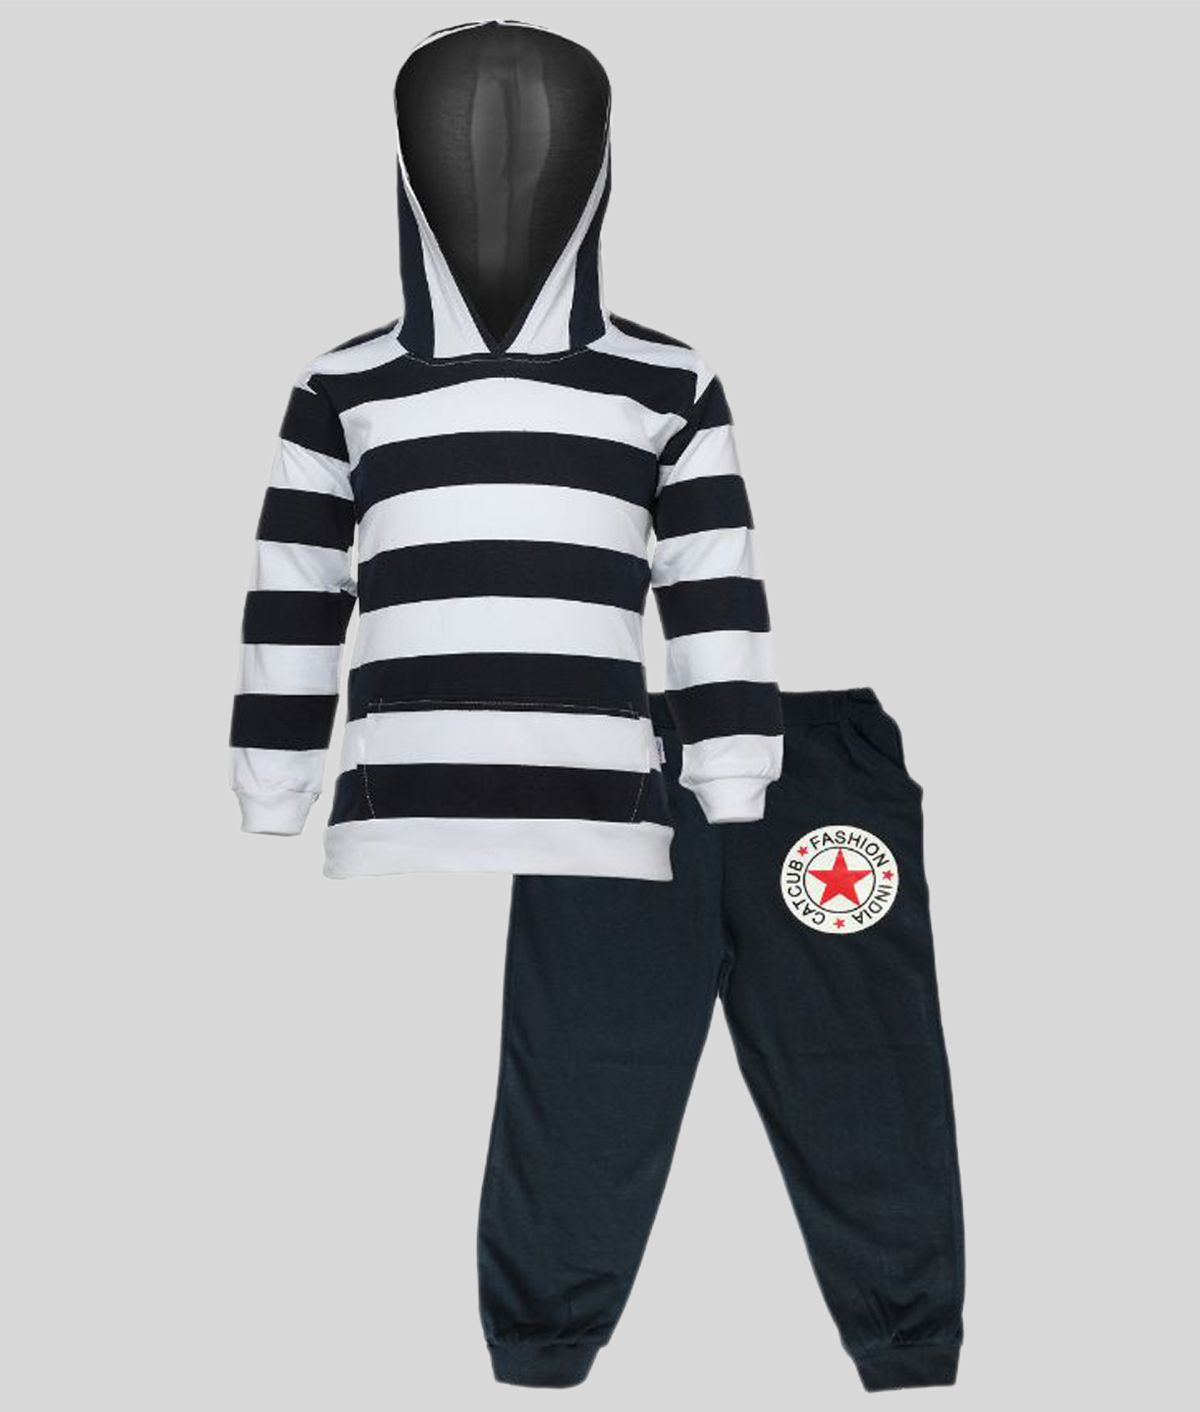     			CATCUB Boy's & Girl's Cotton Hooded Printed Clothing Set(Black)